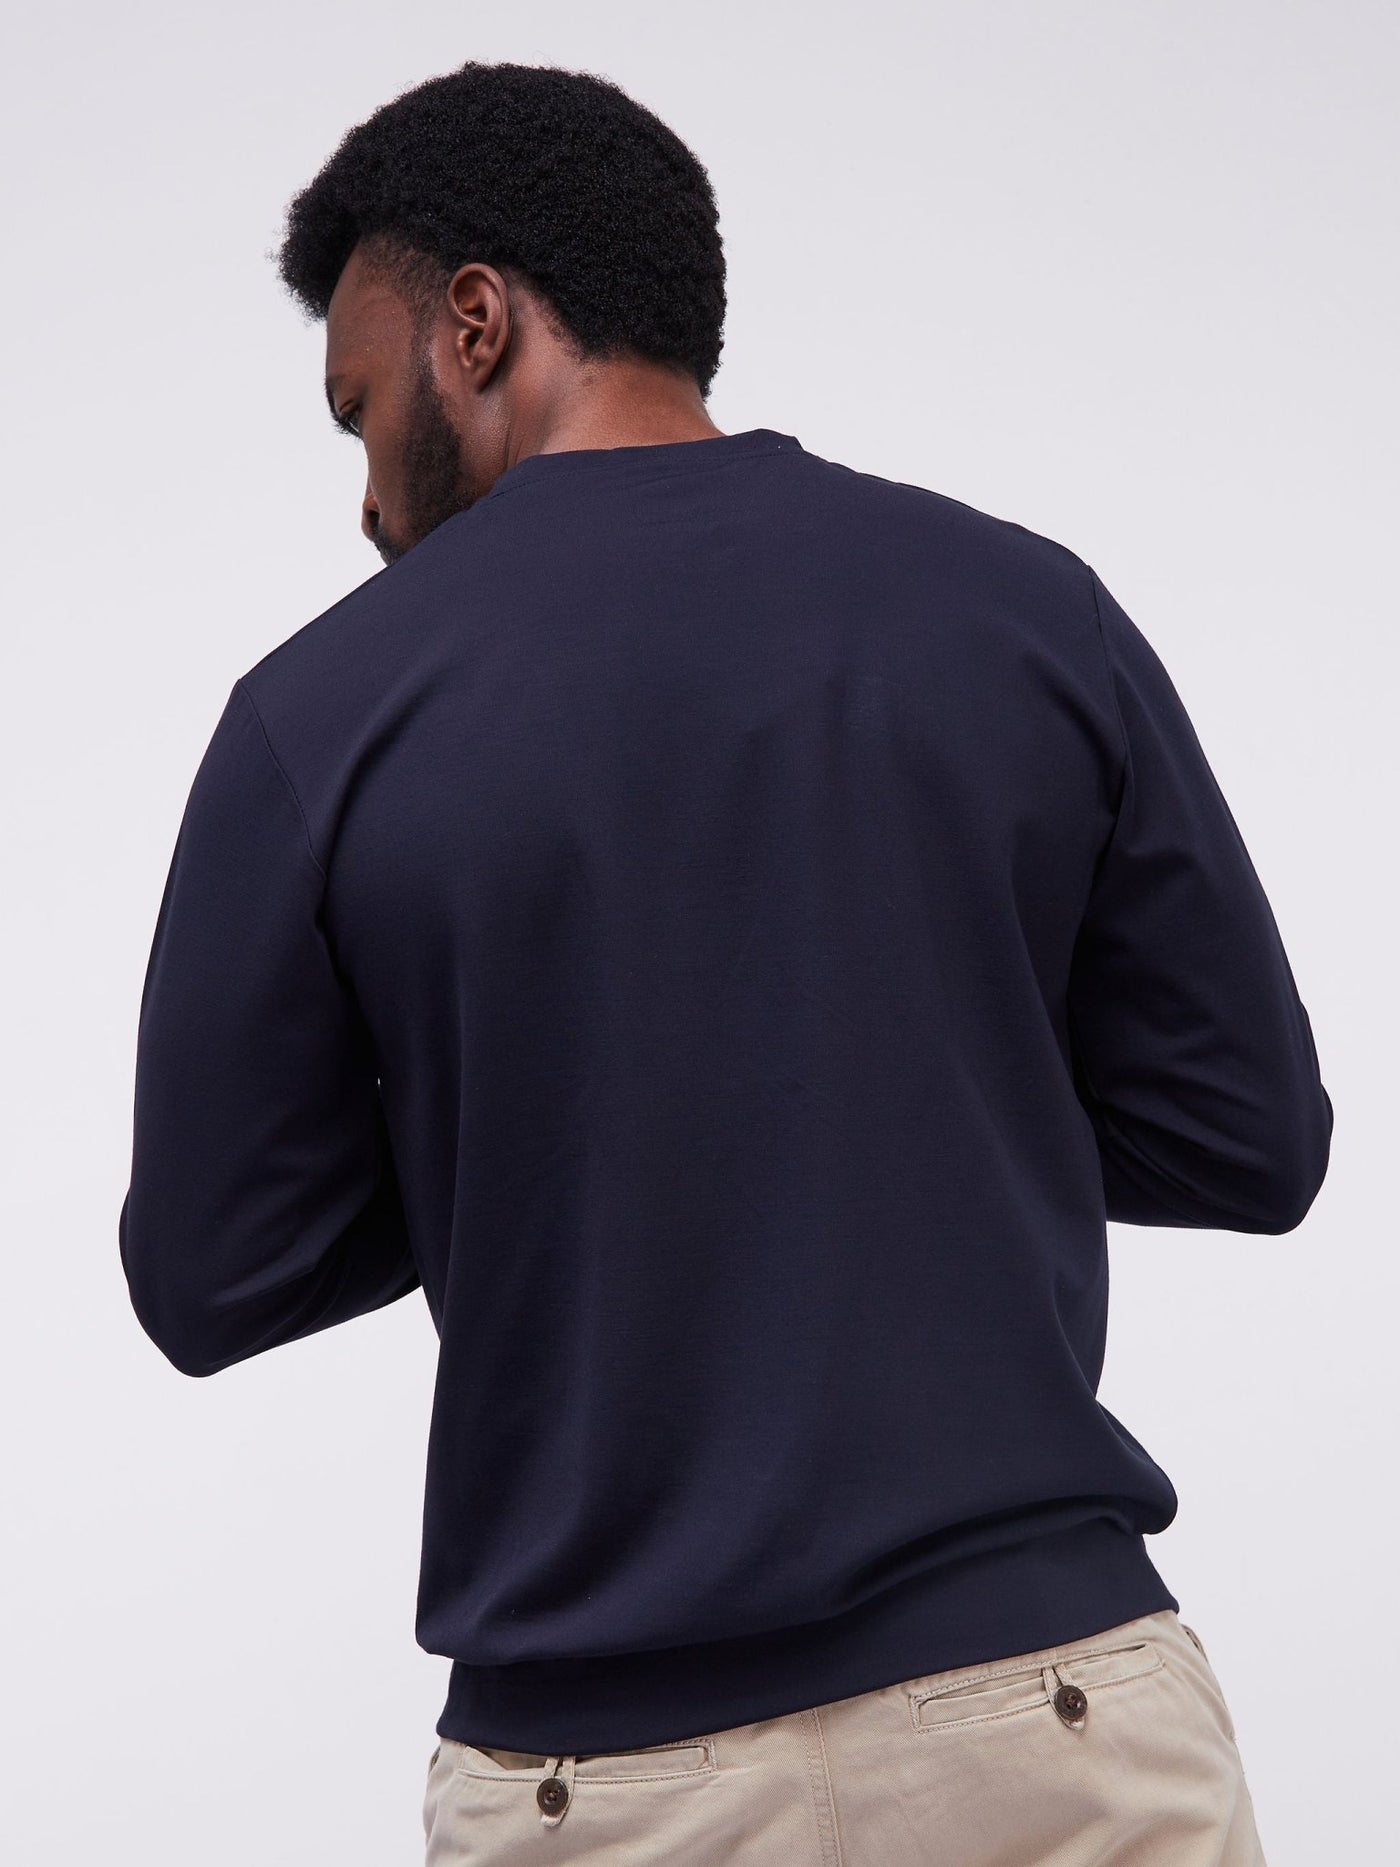 King's Collection Unisex Round Neck Sweatshirt - Navy Blue - Shop Zetu Kenya